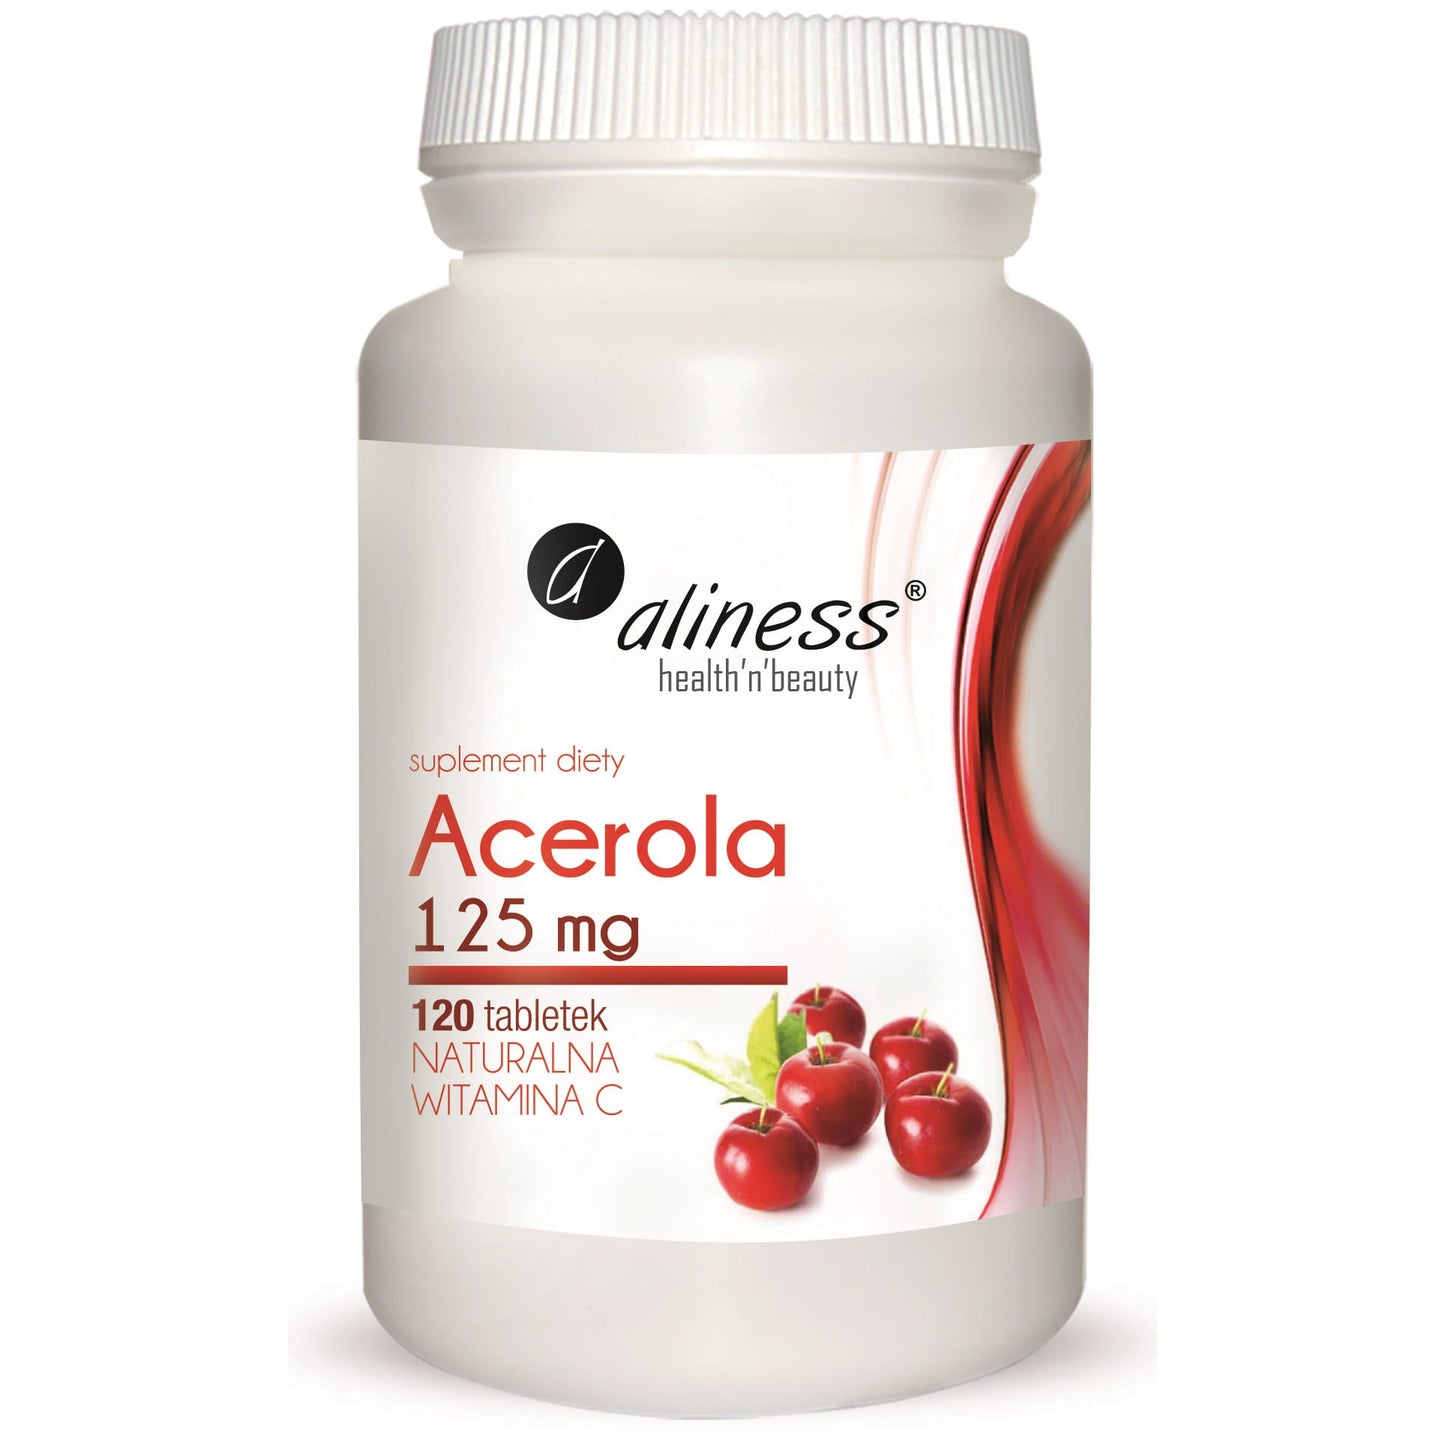 Aliness Acerola, 120 tabletek. Naturalna Vitamina C 125mg